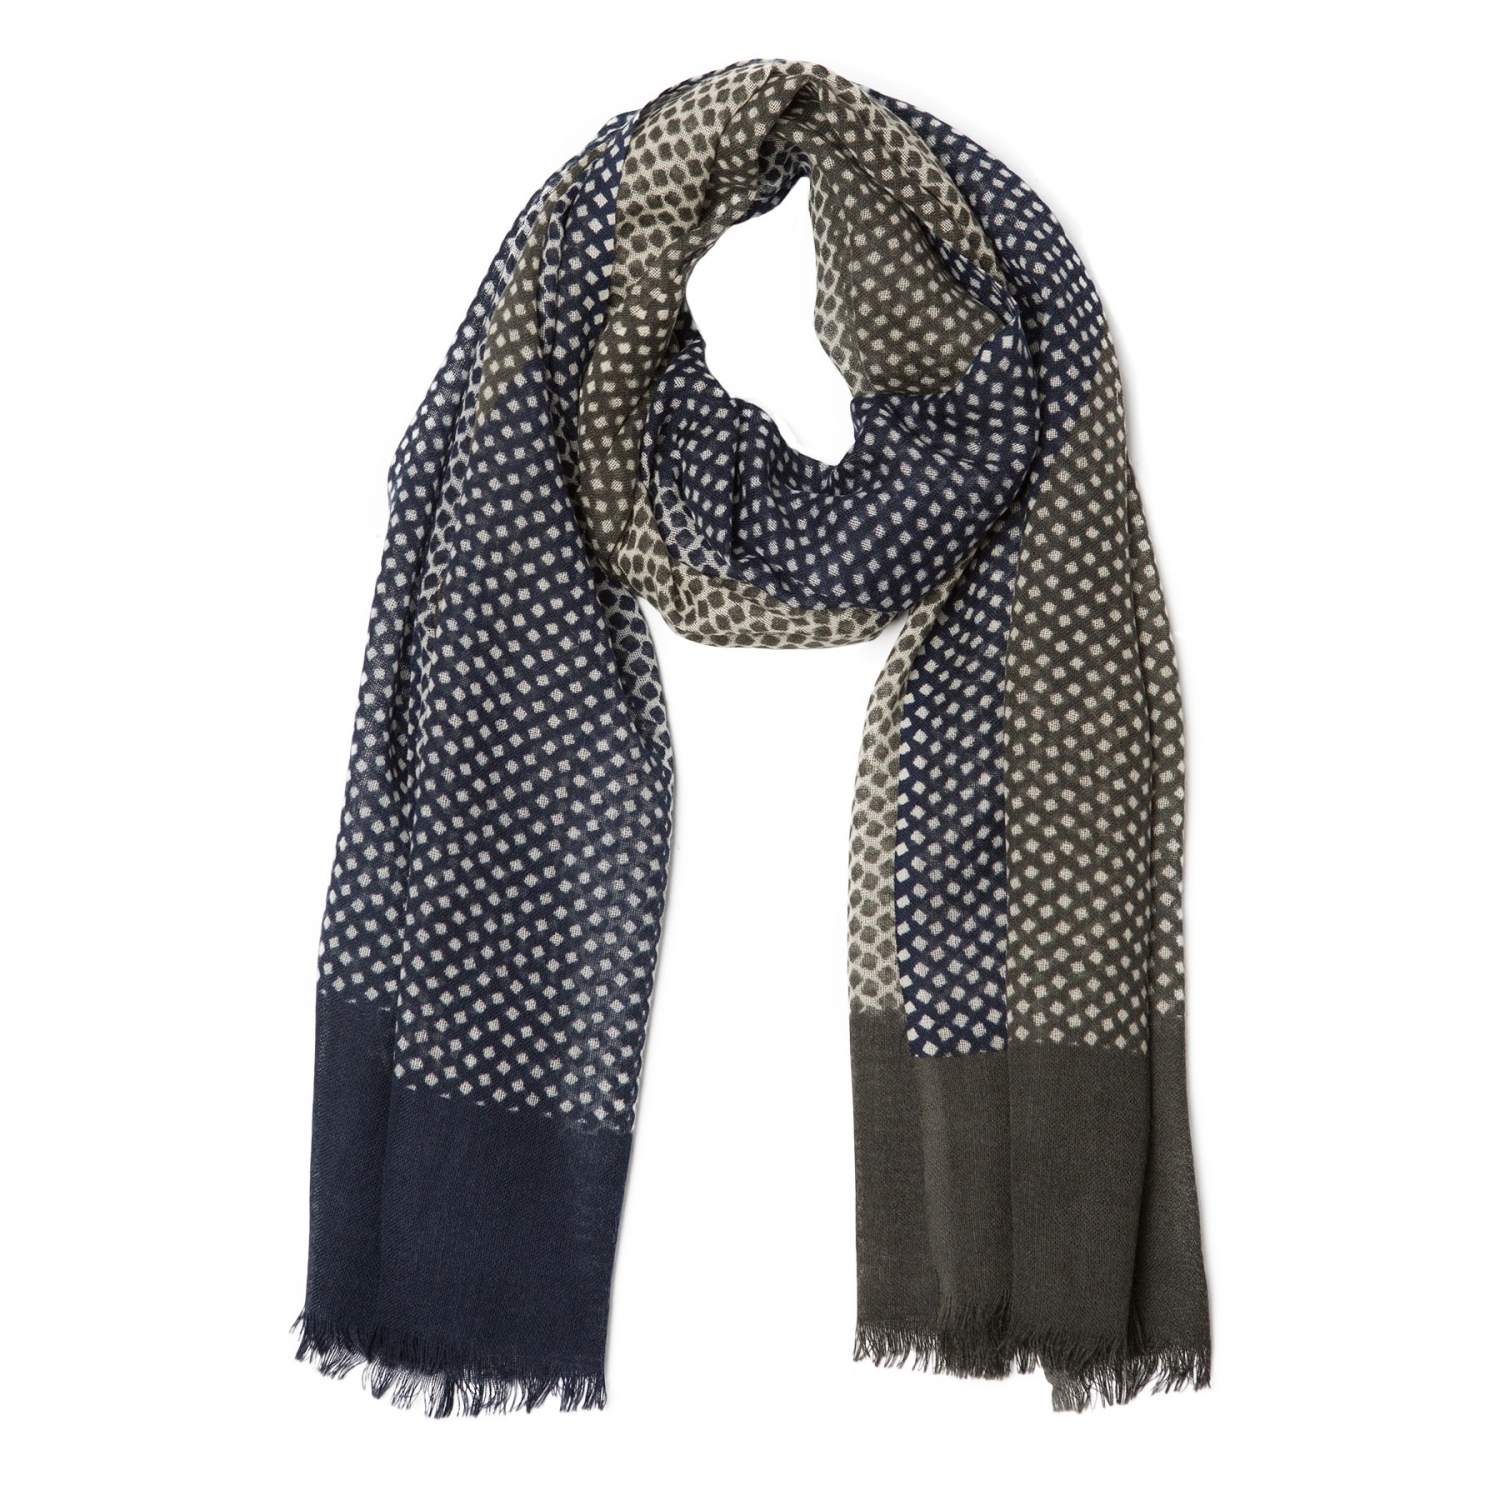 Wool scarf Mila Schon unisex olive navy pattern